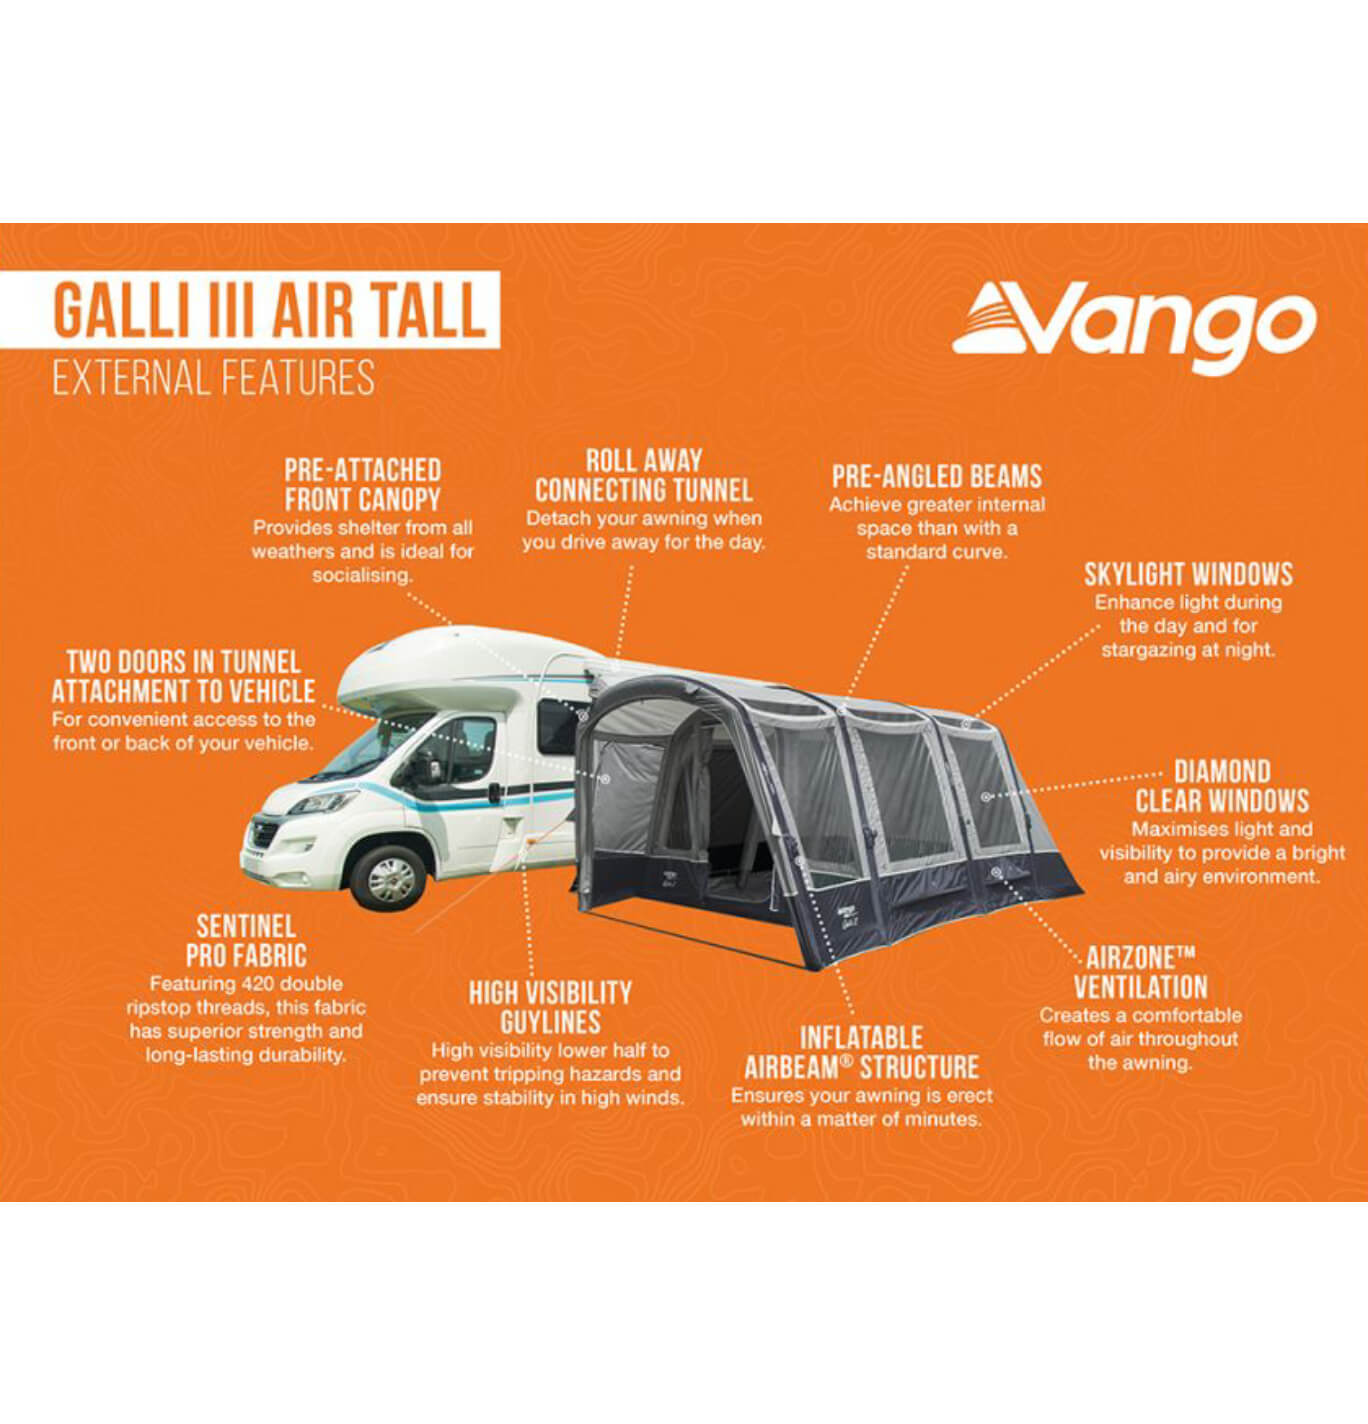 Vango Galli III Tall AirWay Drive Away Awning Image